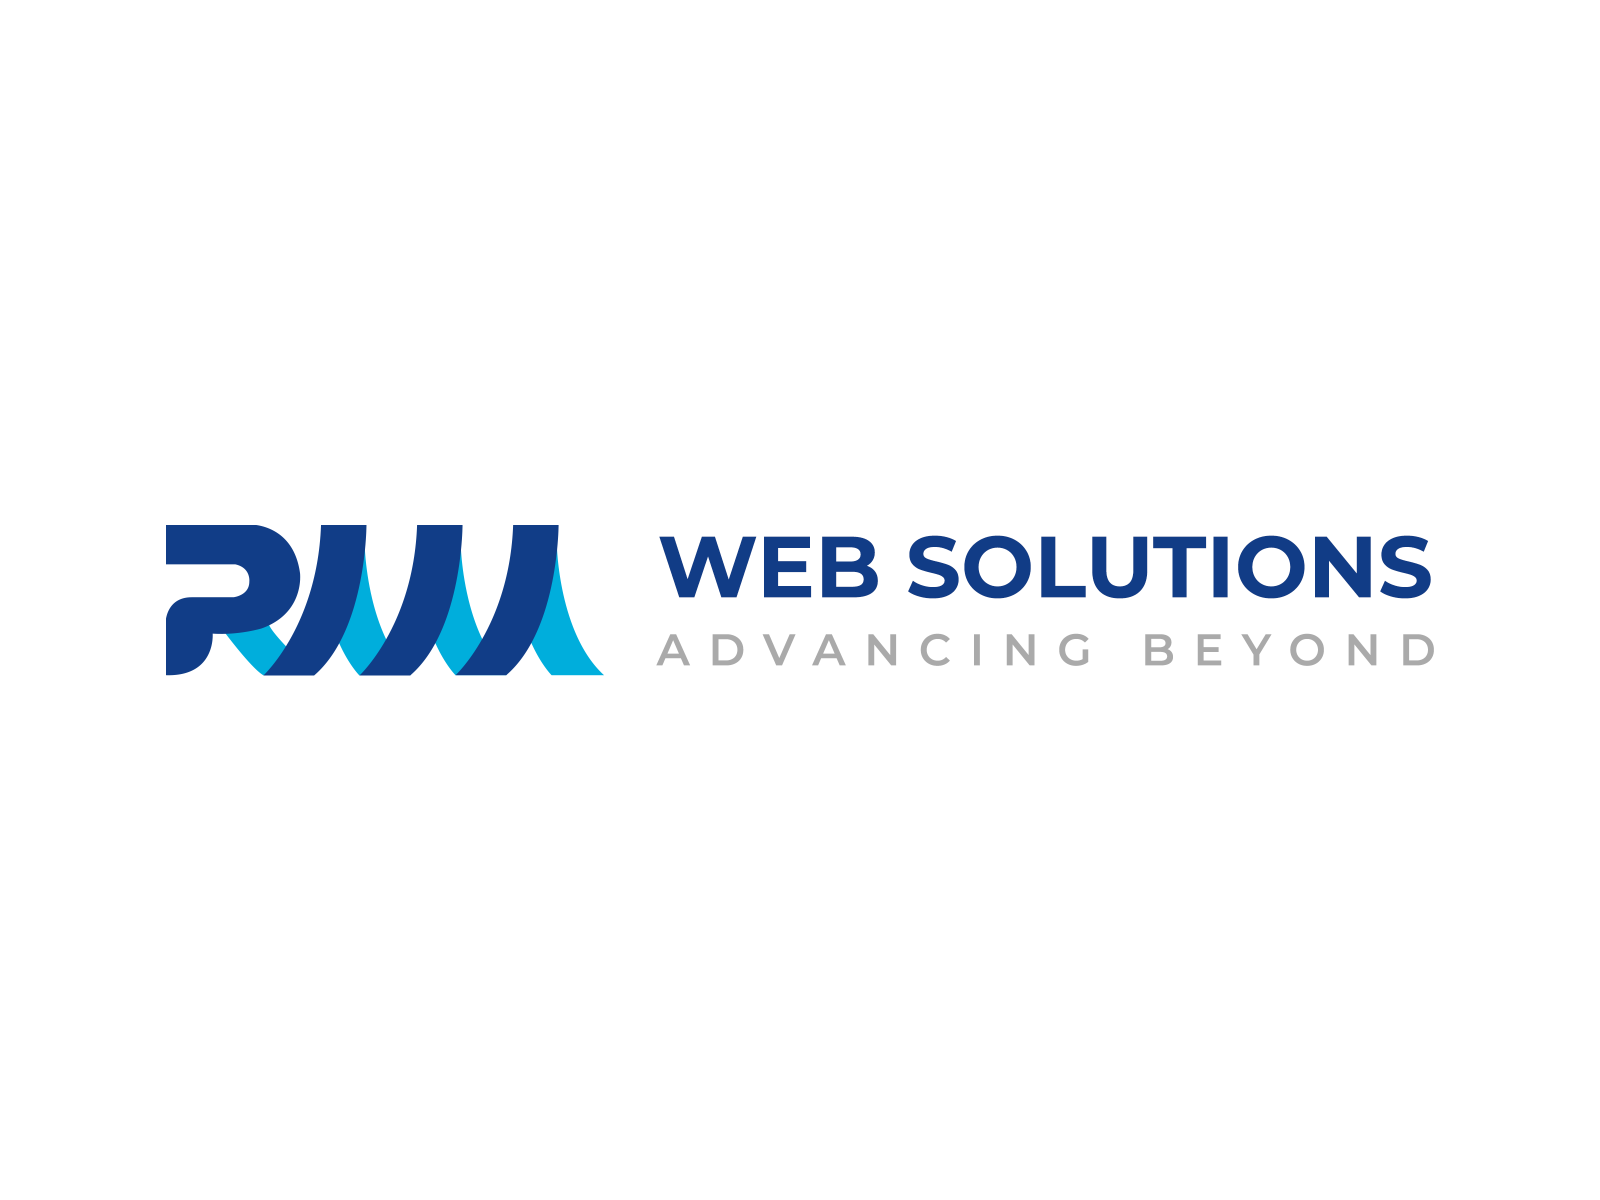 RMM Web Solution Website Logo by Adnan Mahboob on Dribbble